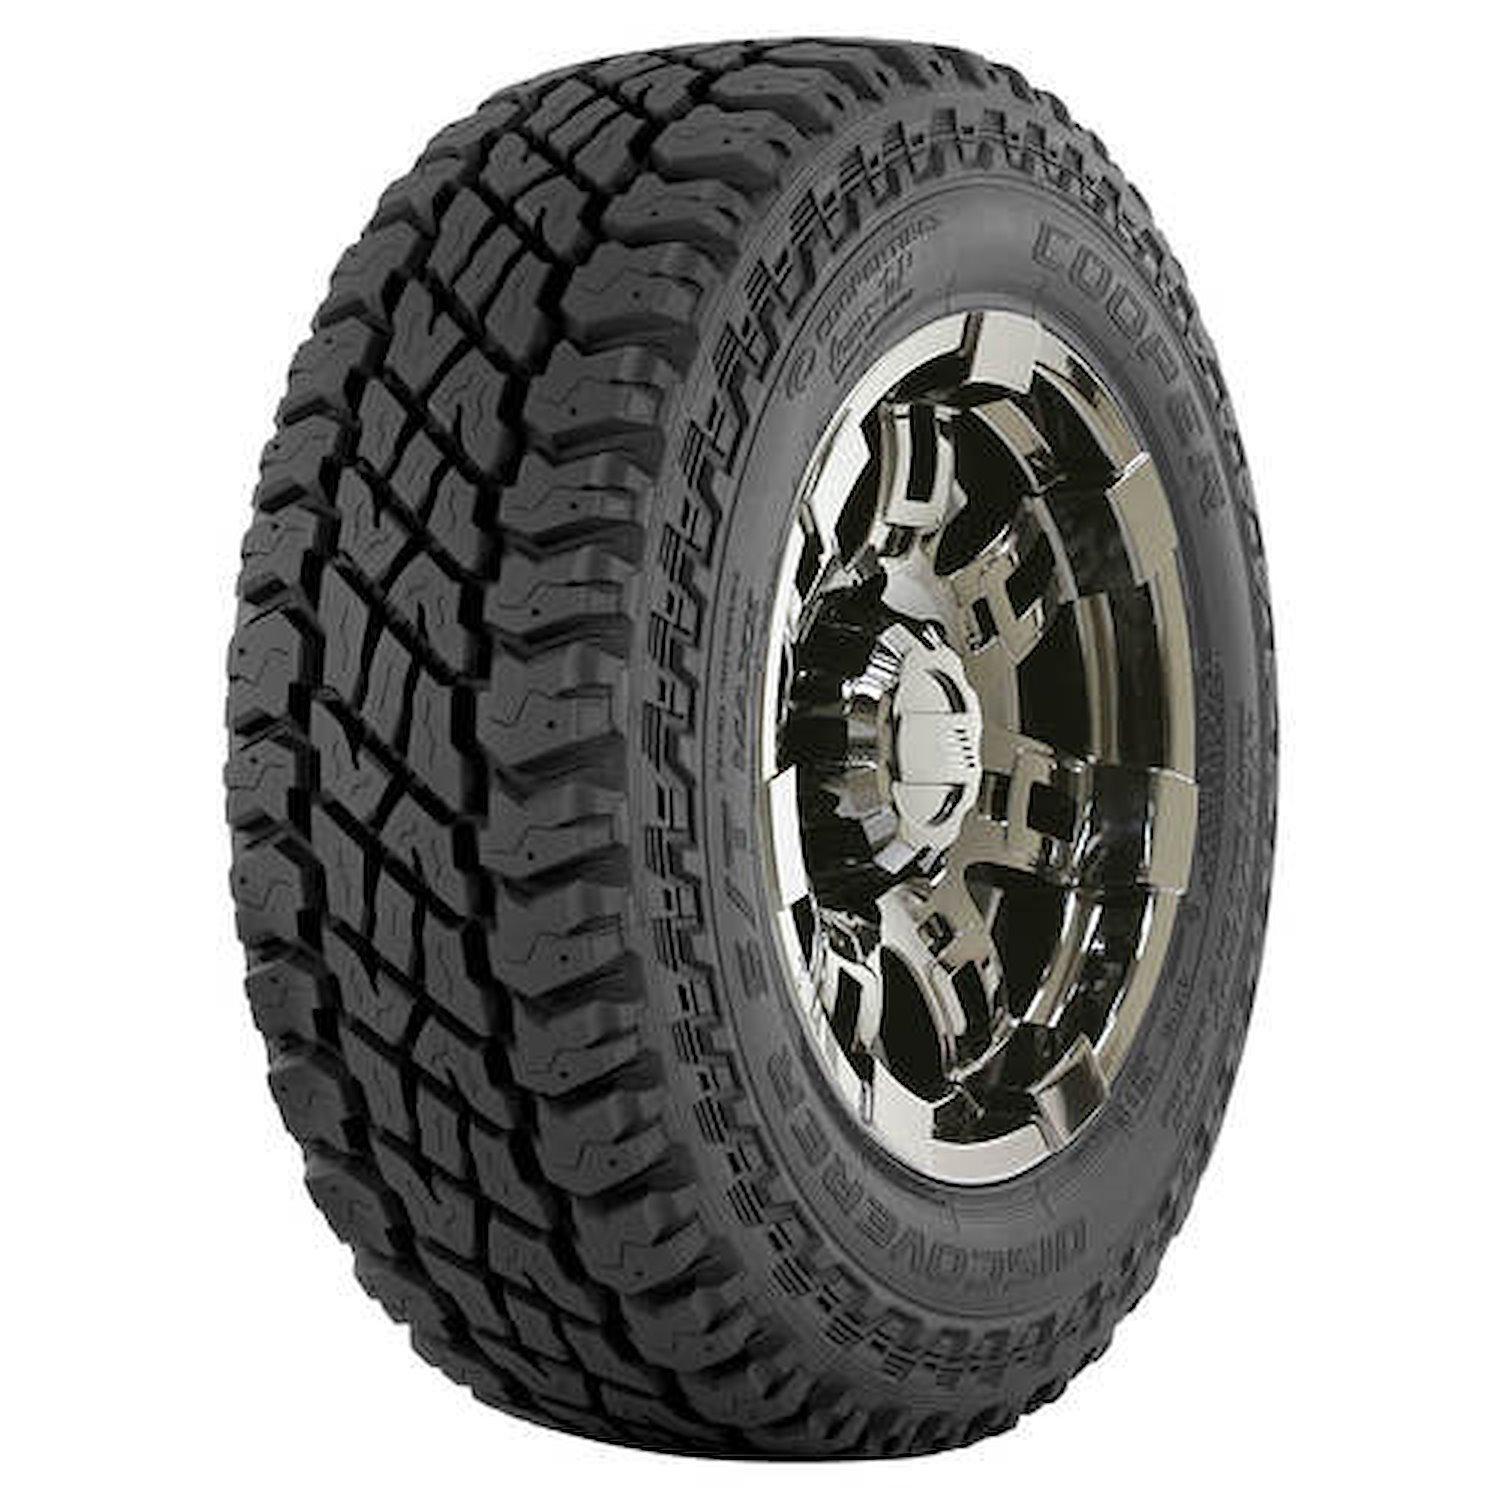 Discoverer S/T Maxx All-Terrain Tire, LT265/75R16